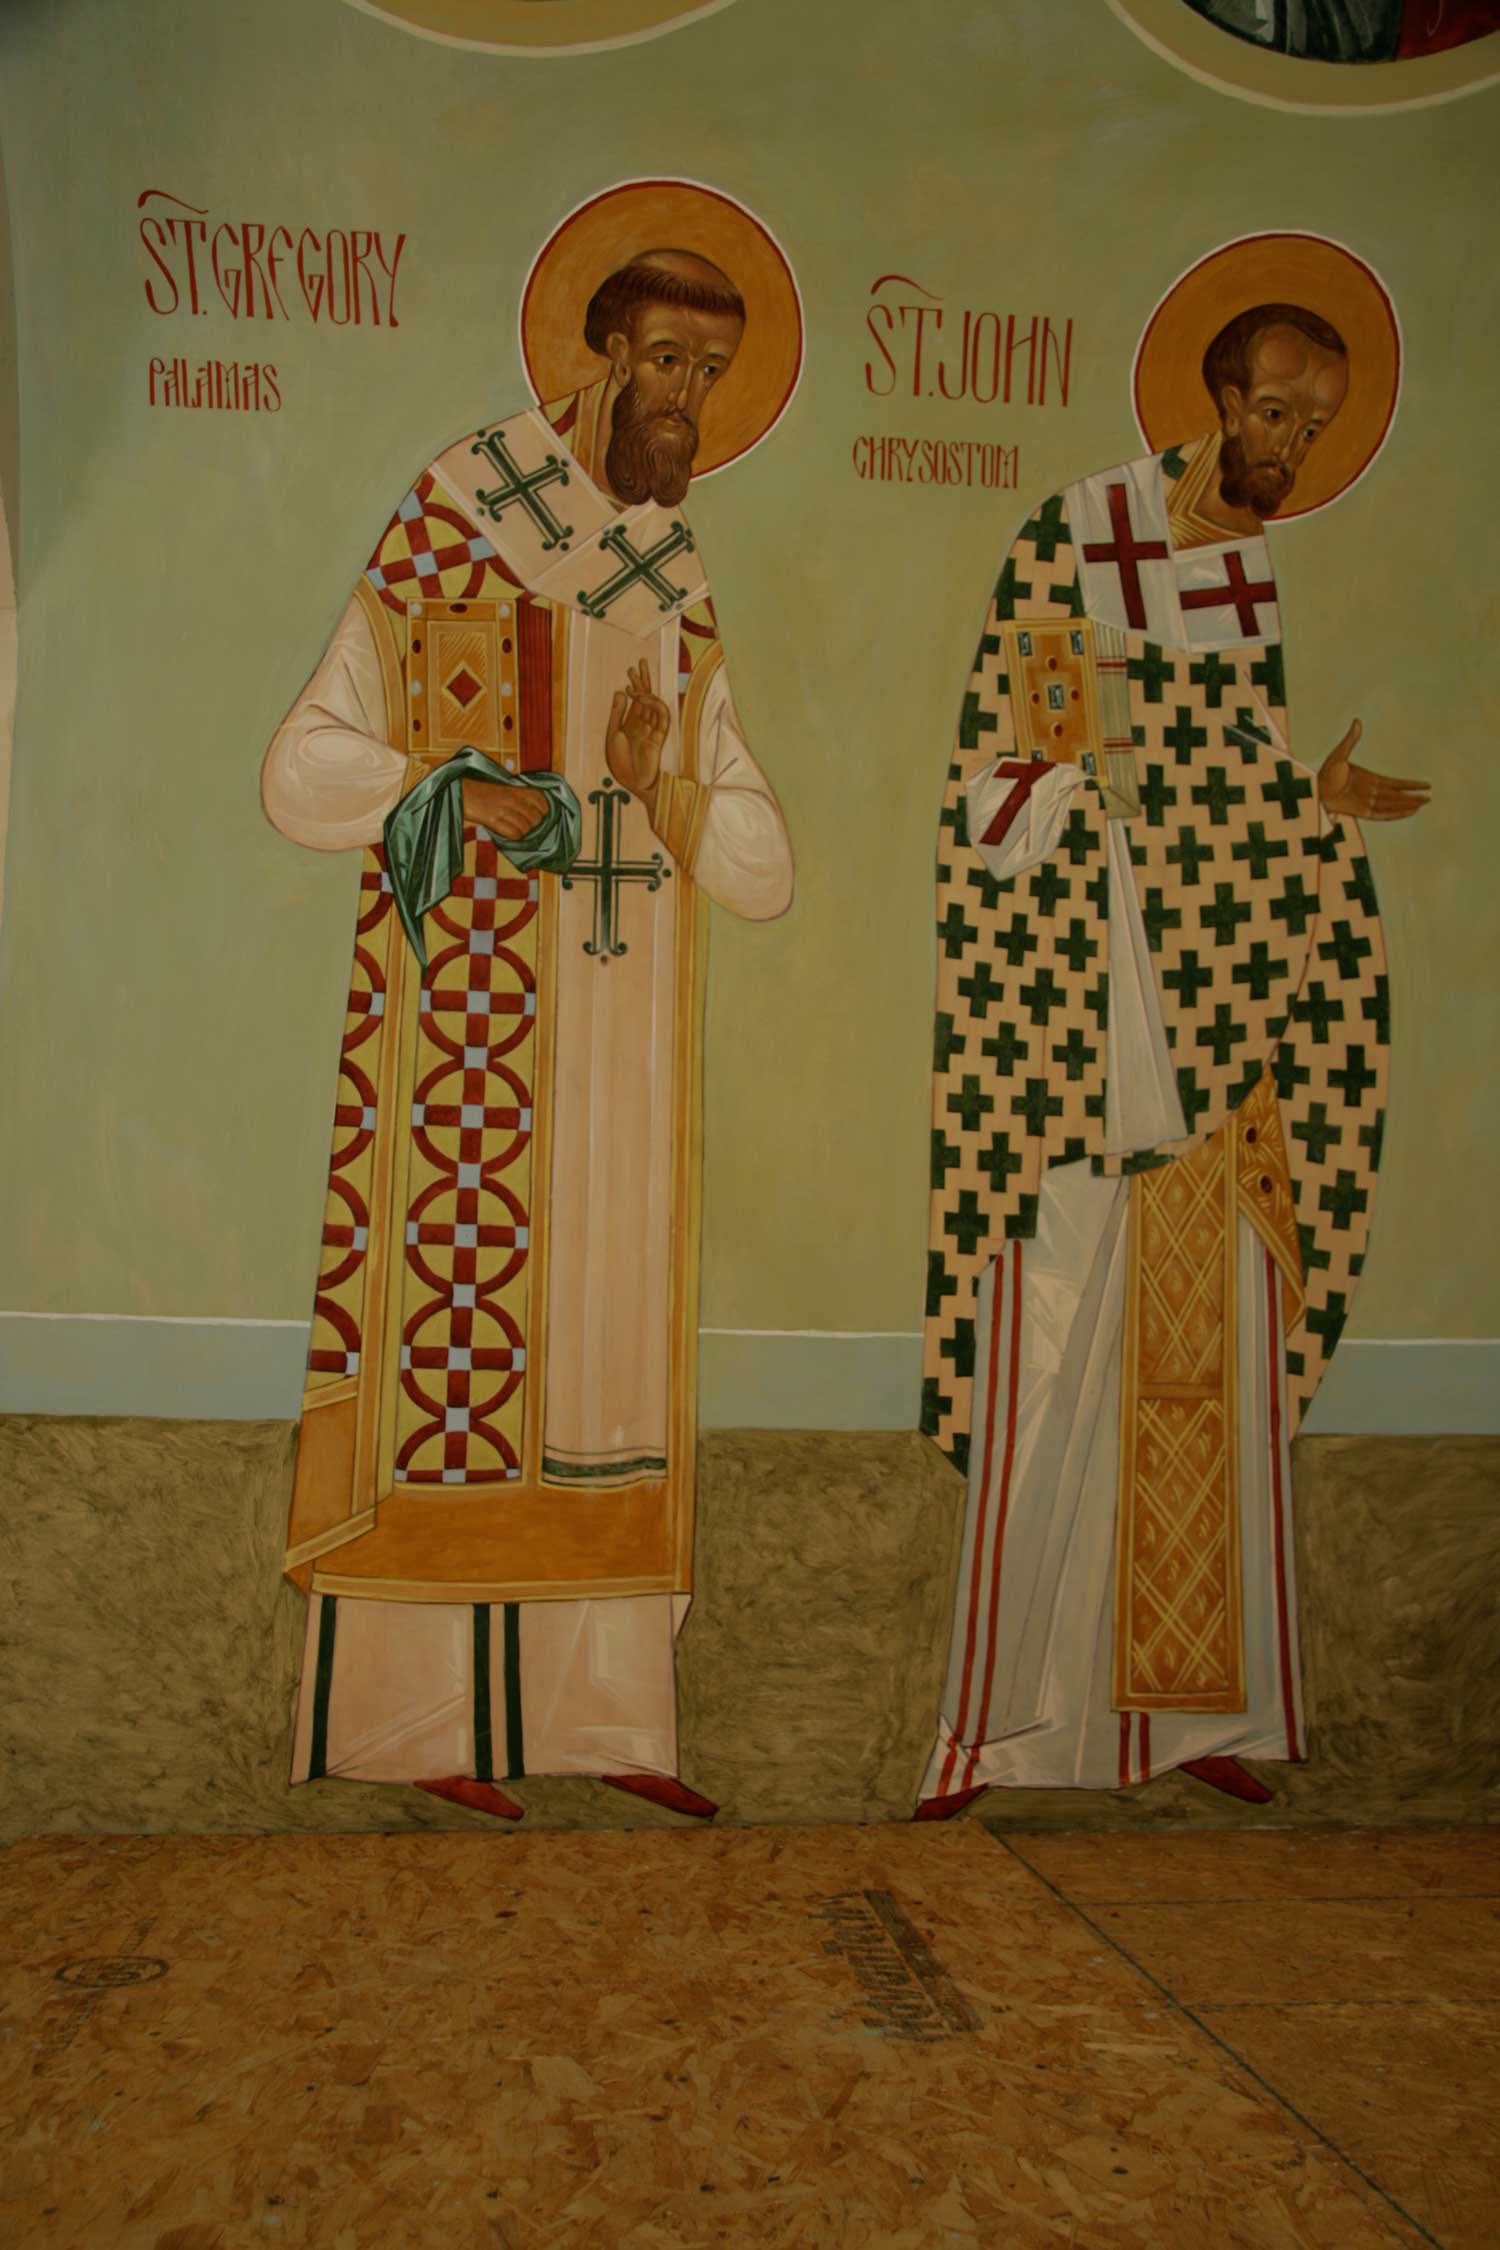 St Gregory Palamas and St John Chrysostom